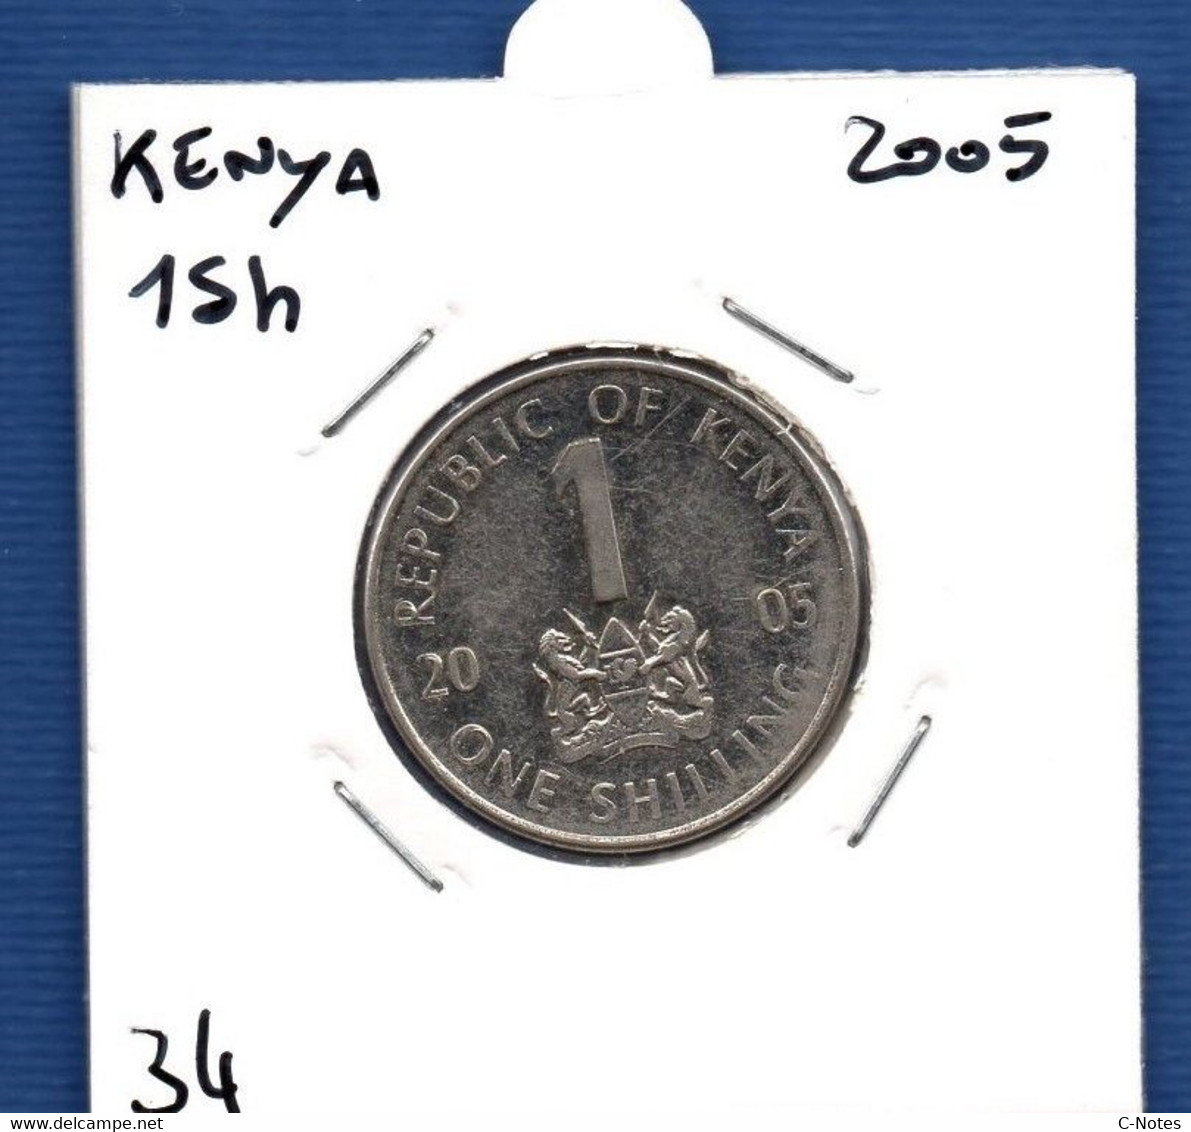 KENYA - 1 Shilling 2005 -  See Photos -  Km 34 - Kenya